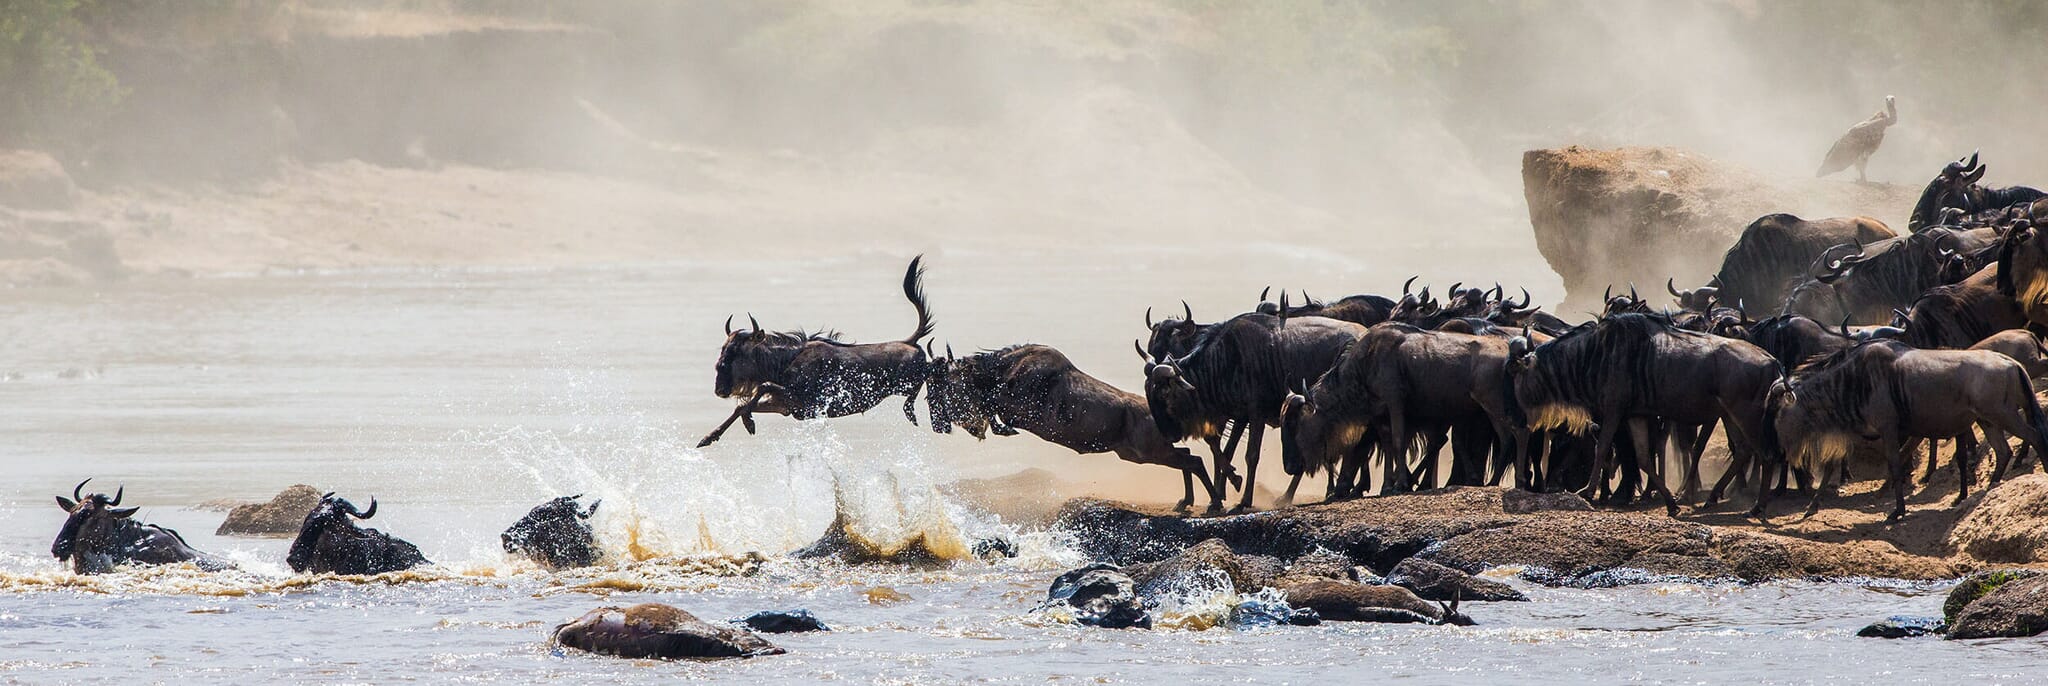 serengeti tanzania great migration wildebeest family safari